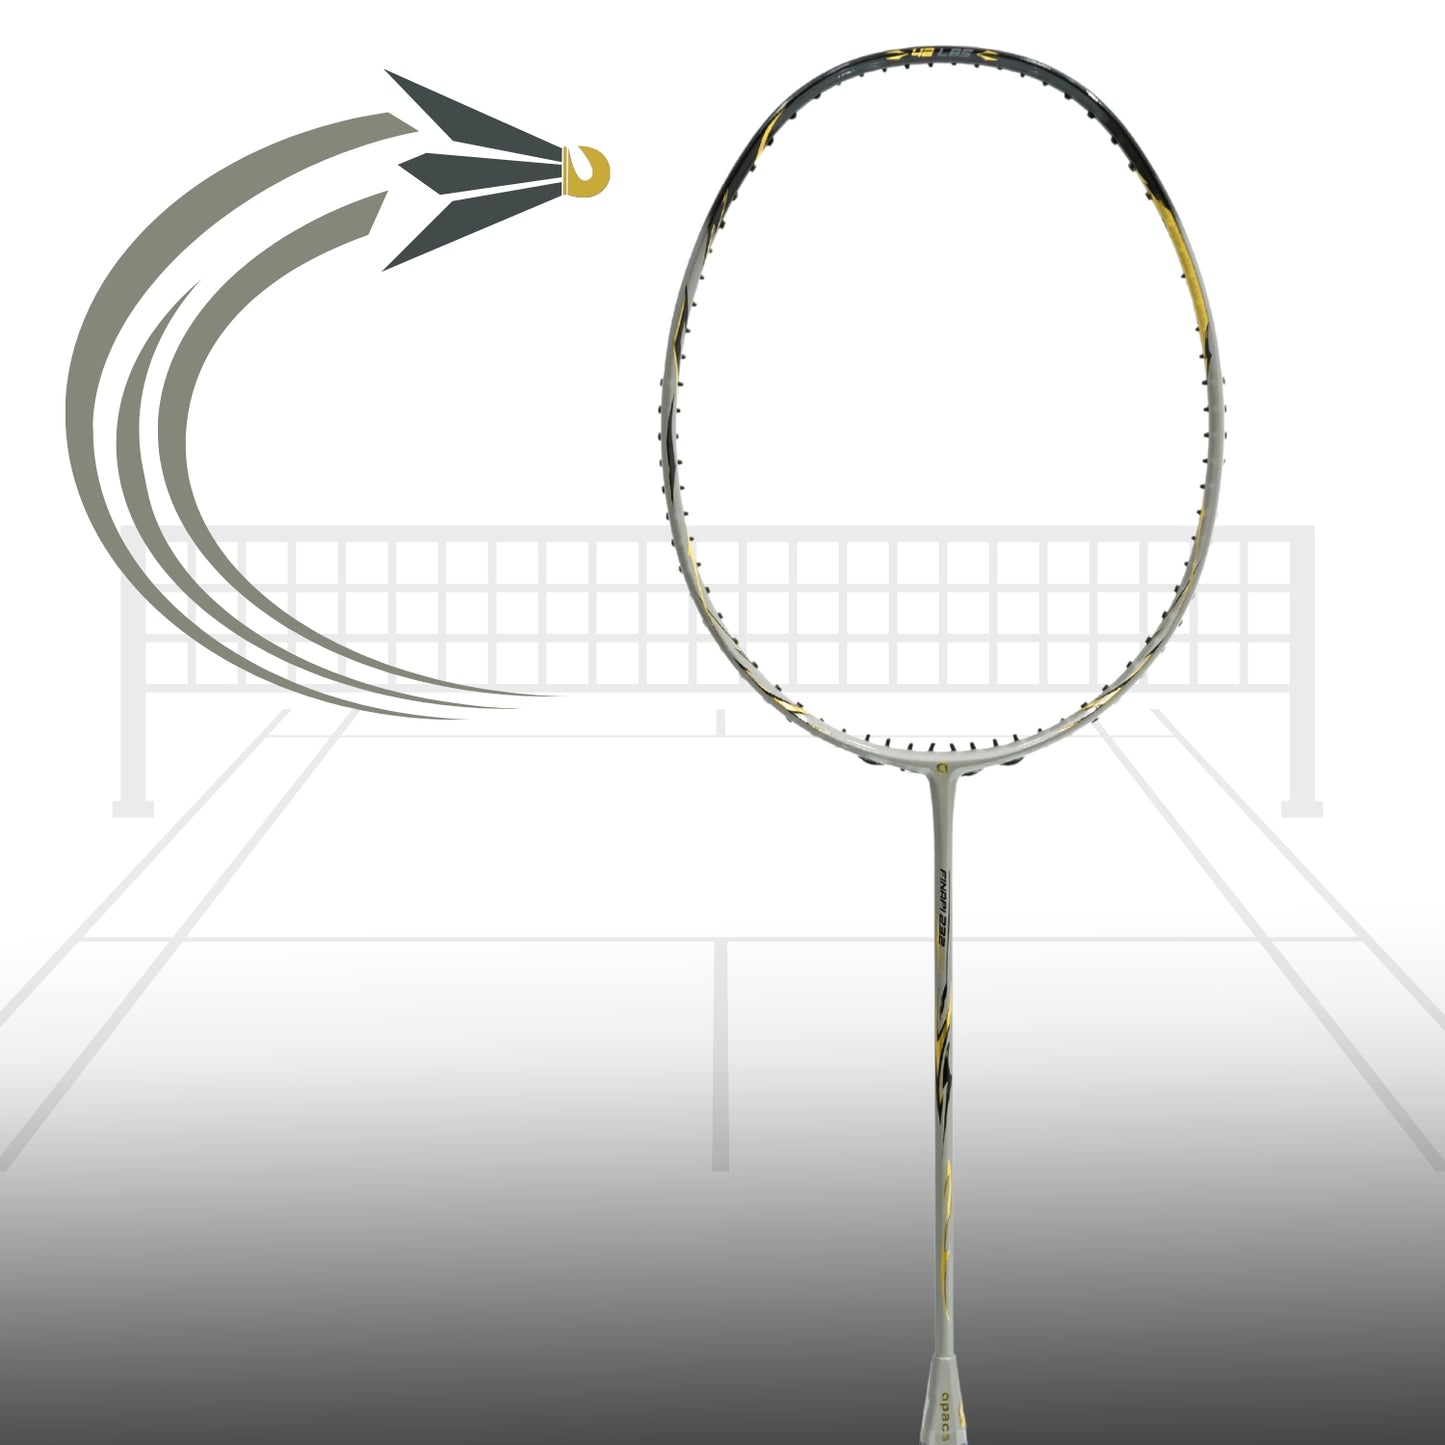 Apacs  Finapi 232 Reborn Badminton Racket - Without Cover - Best Price online Prokicksports.com